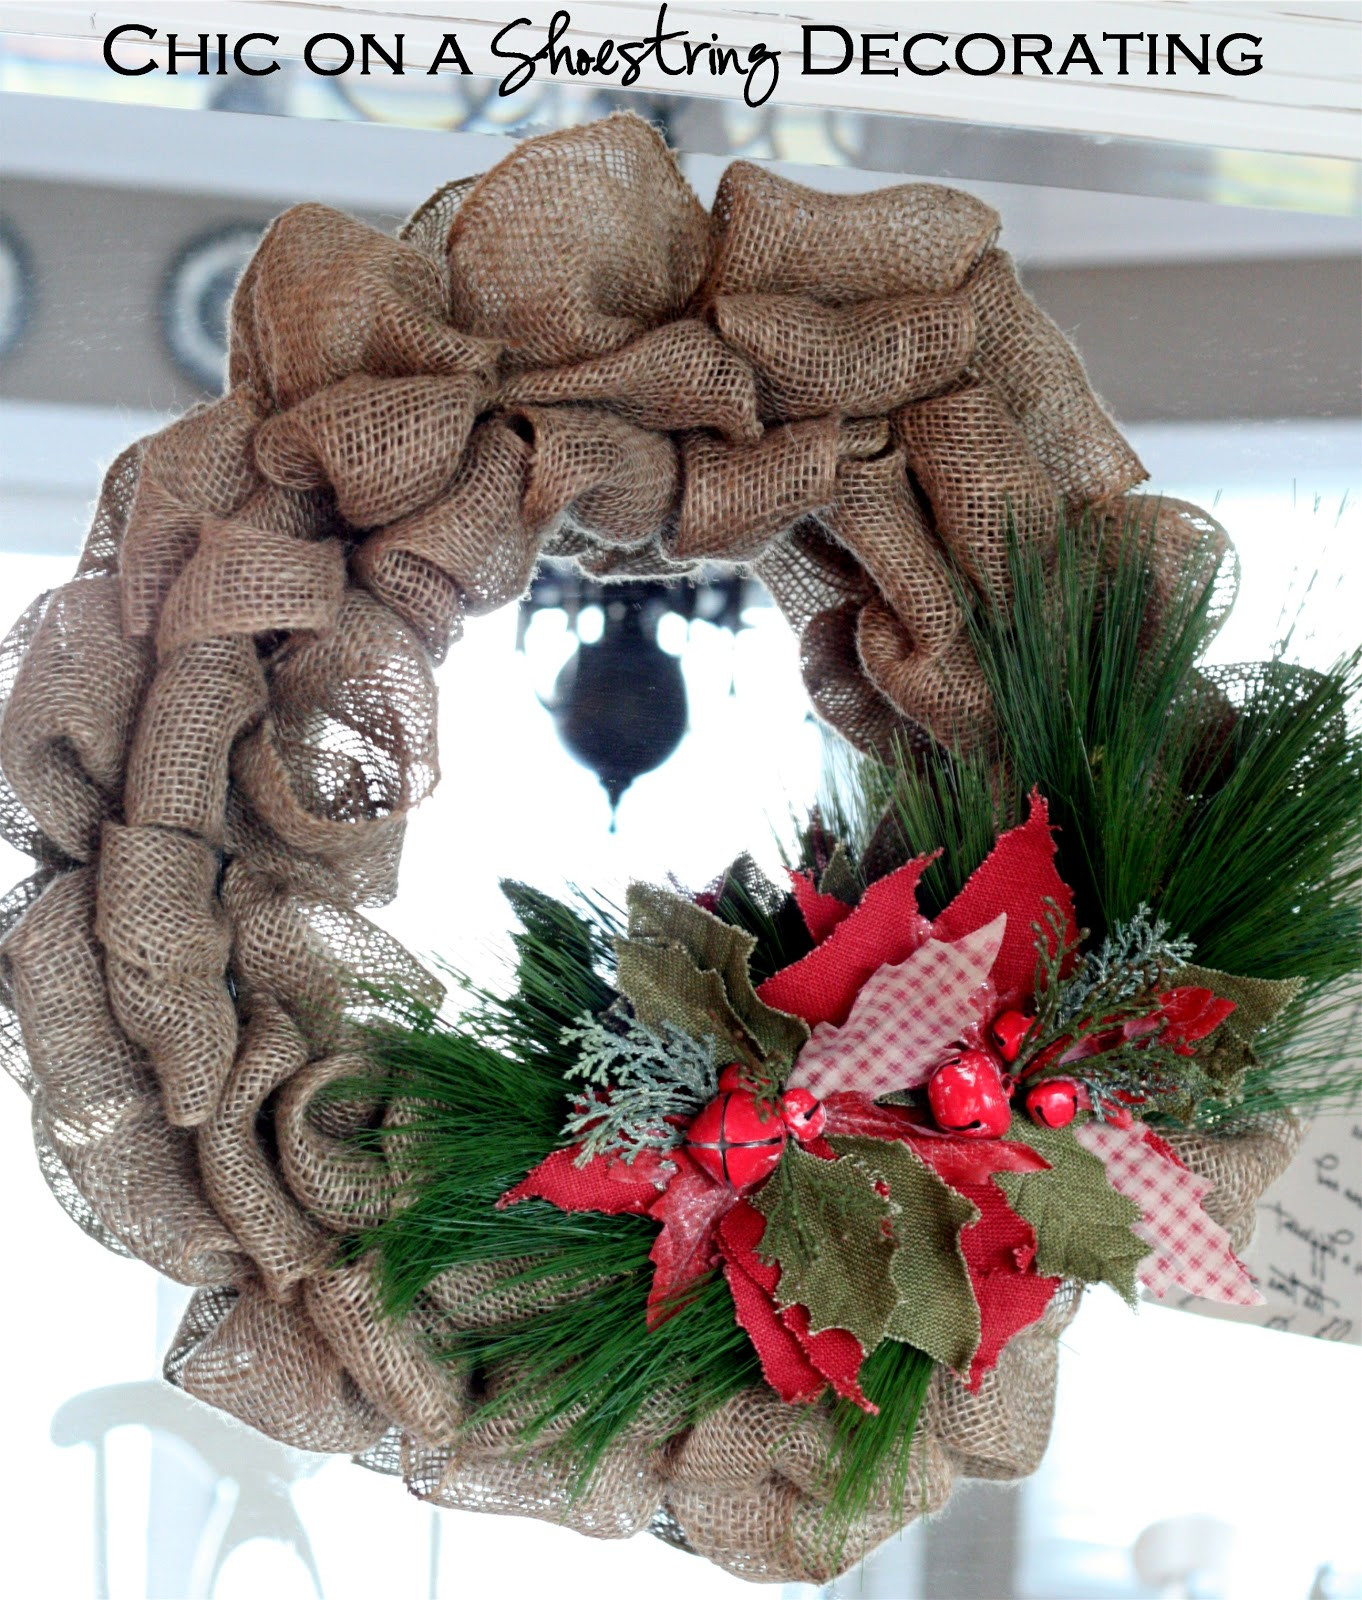 DIY Burlap Christmas Wreaths
 DIY Burlap Christmas Wreath